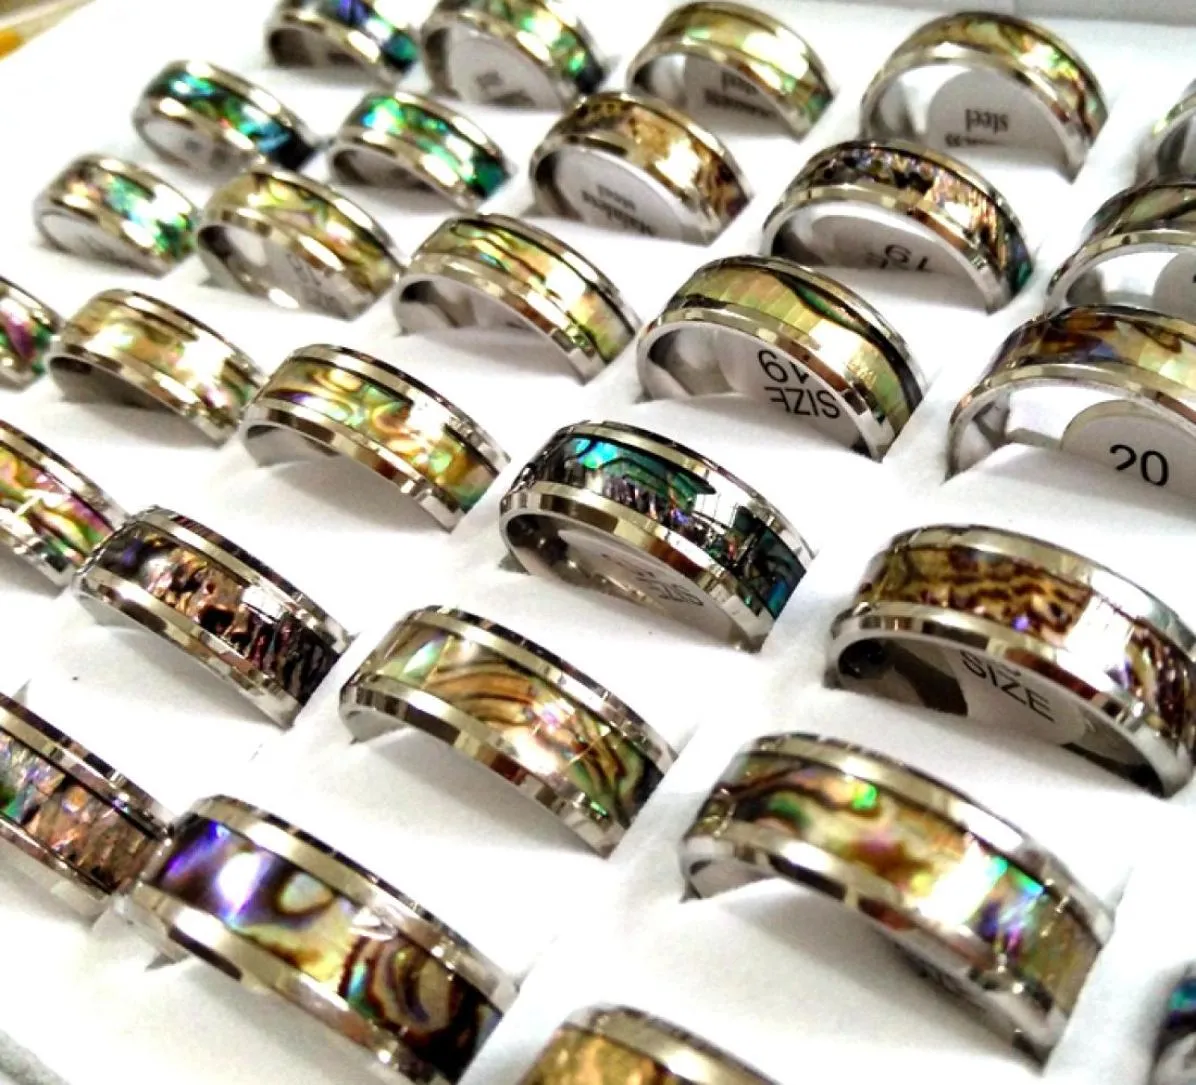 Hele 50 stks unieke vintage mannen vrouwen echte shell roestvrijstalen ringen 8 mm band kleurrijke mooie trouwringen kust partij 9138338